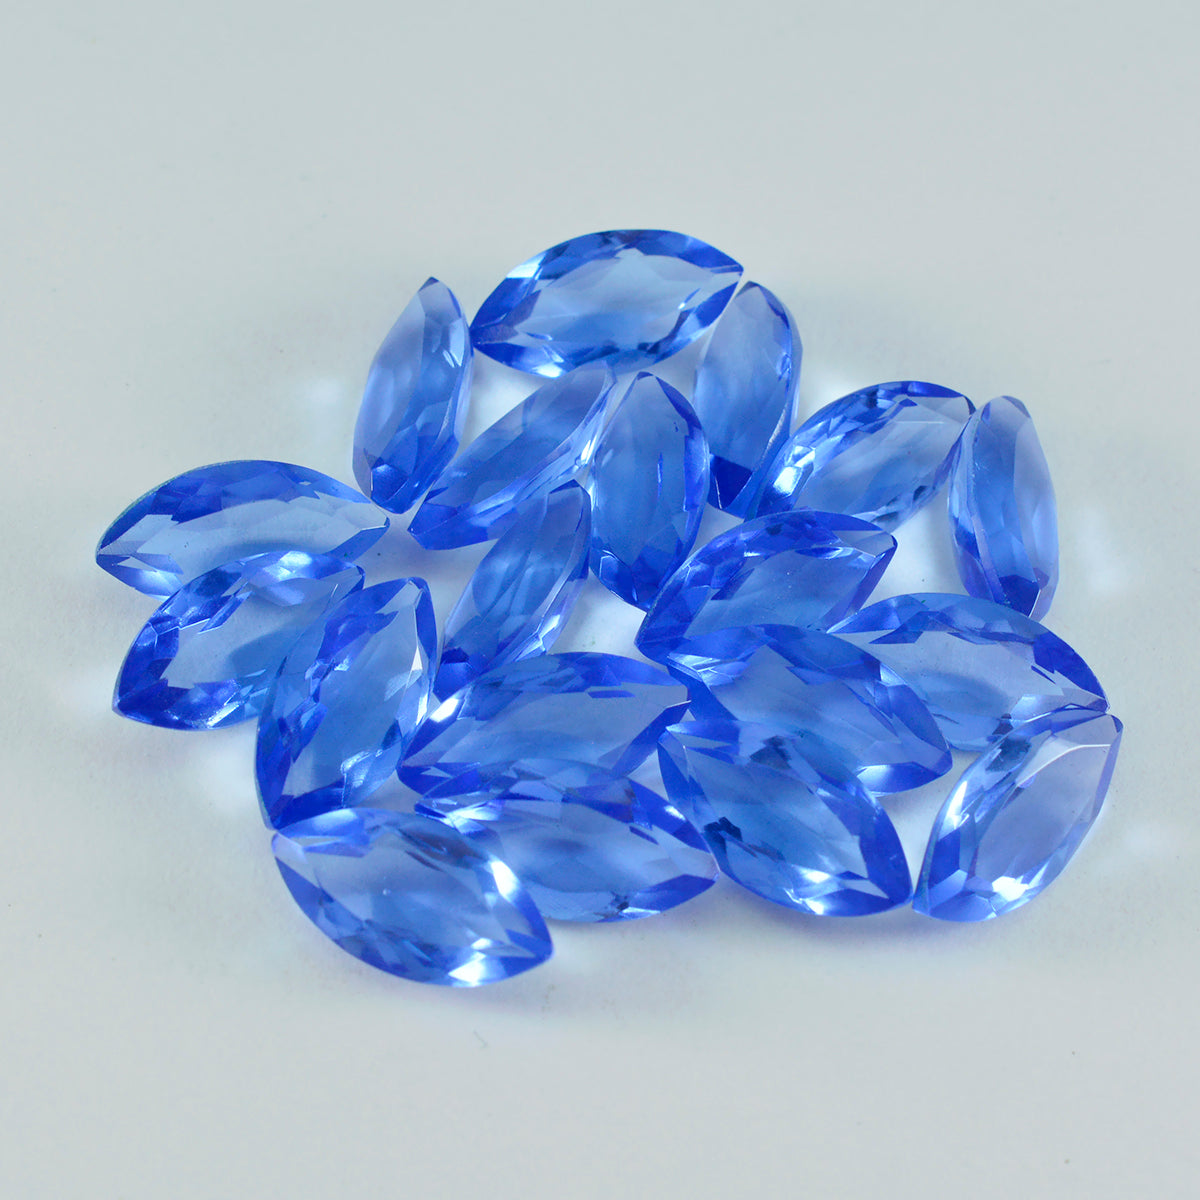 Riyogems 1PC Blue Sapphire CZ Faceted 5x10 mm Marquise Shape superb Quality Loose Gemstone